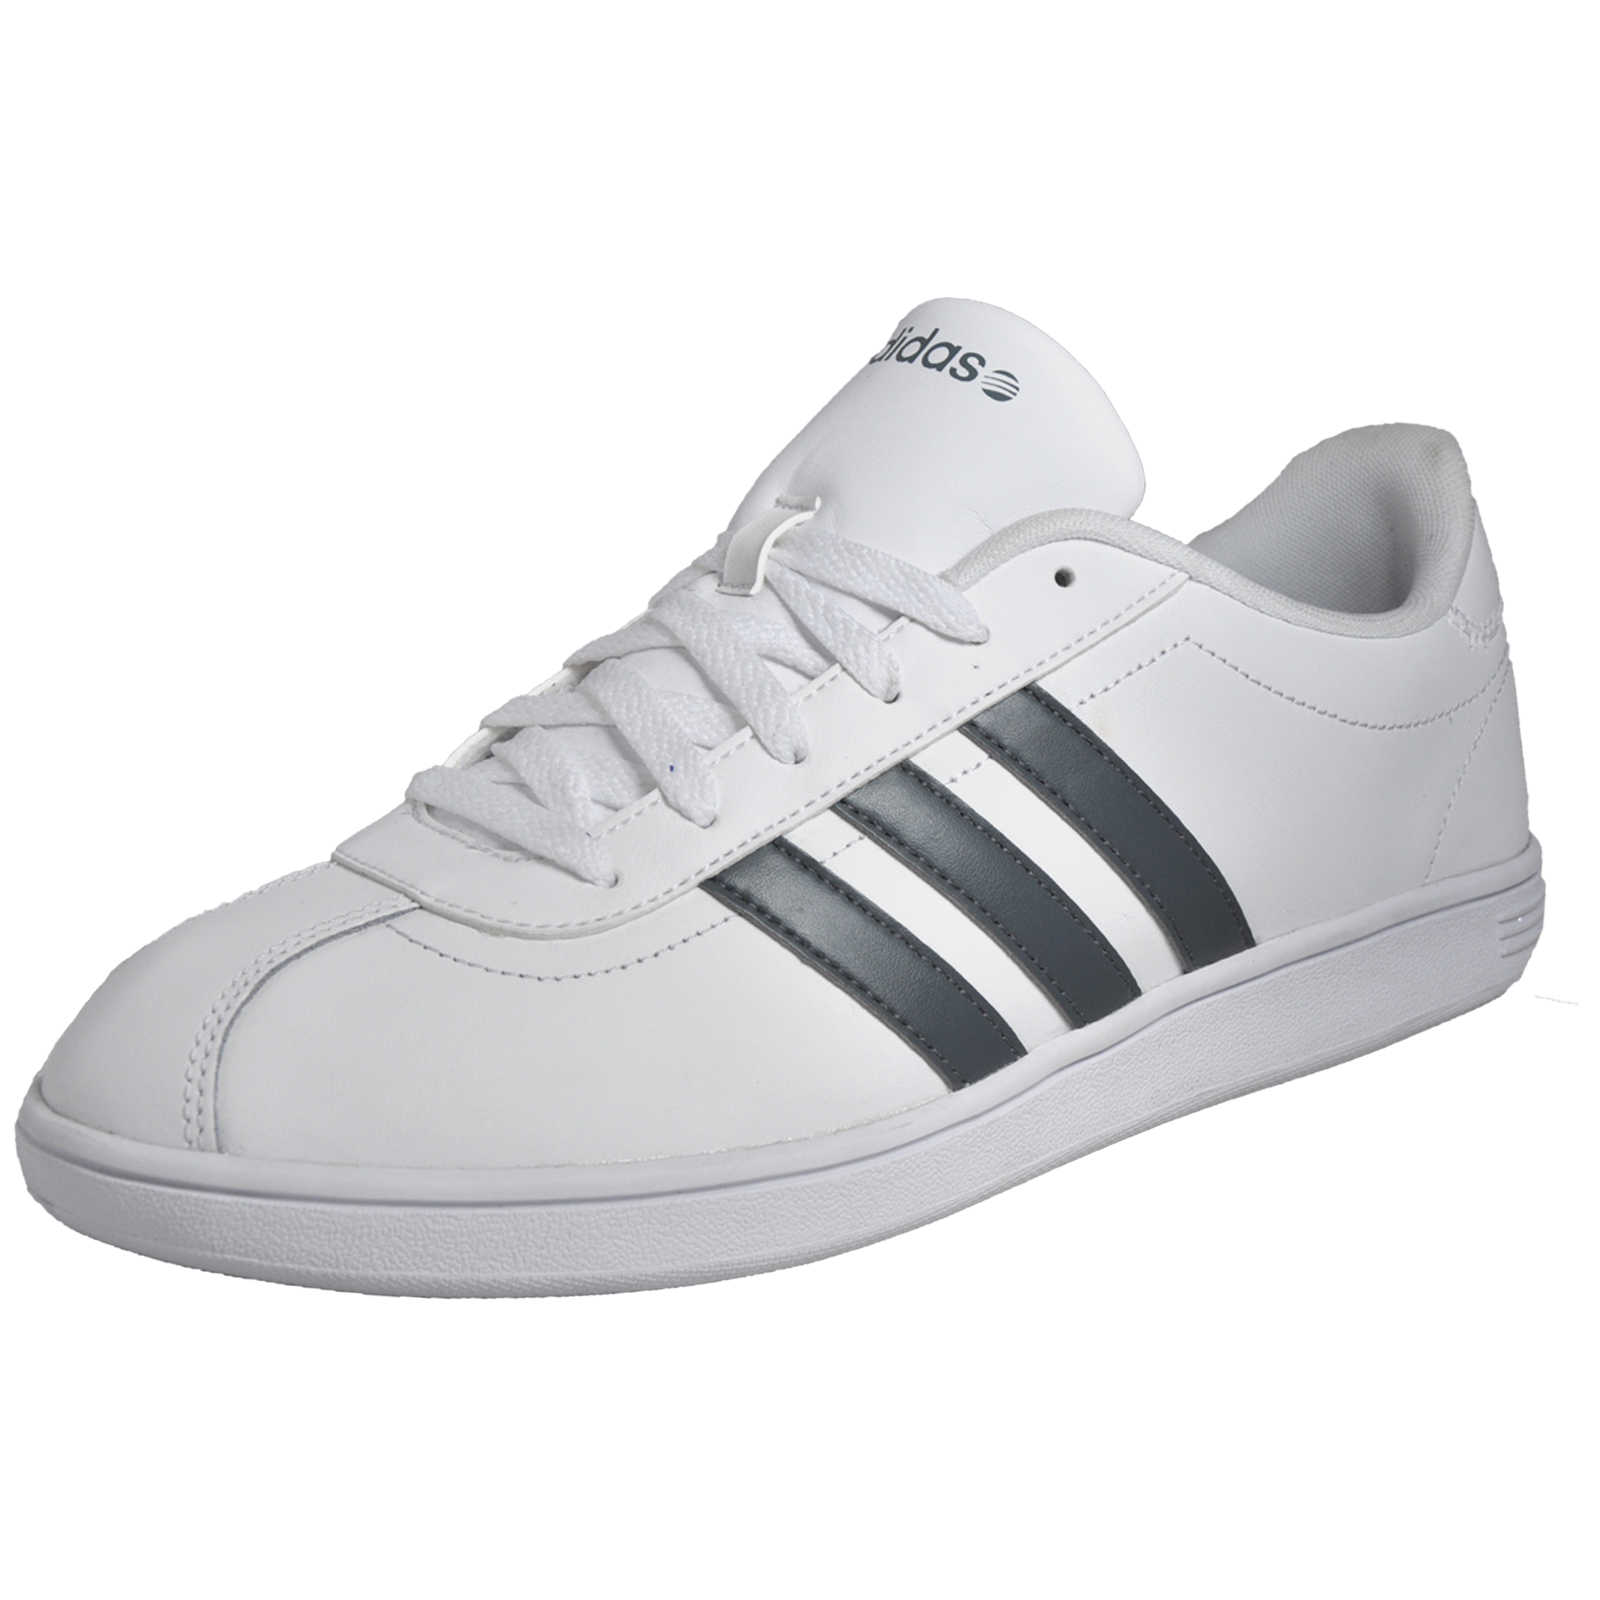 Adidas VL Neo Court Mens Classic Casual Retro Trainers White | eBay